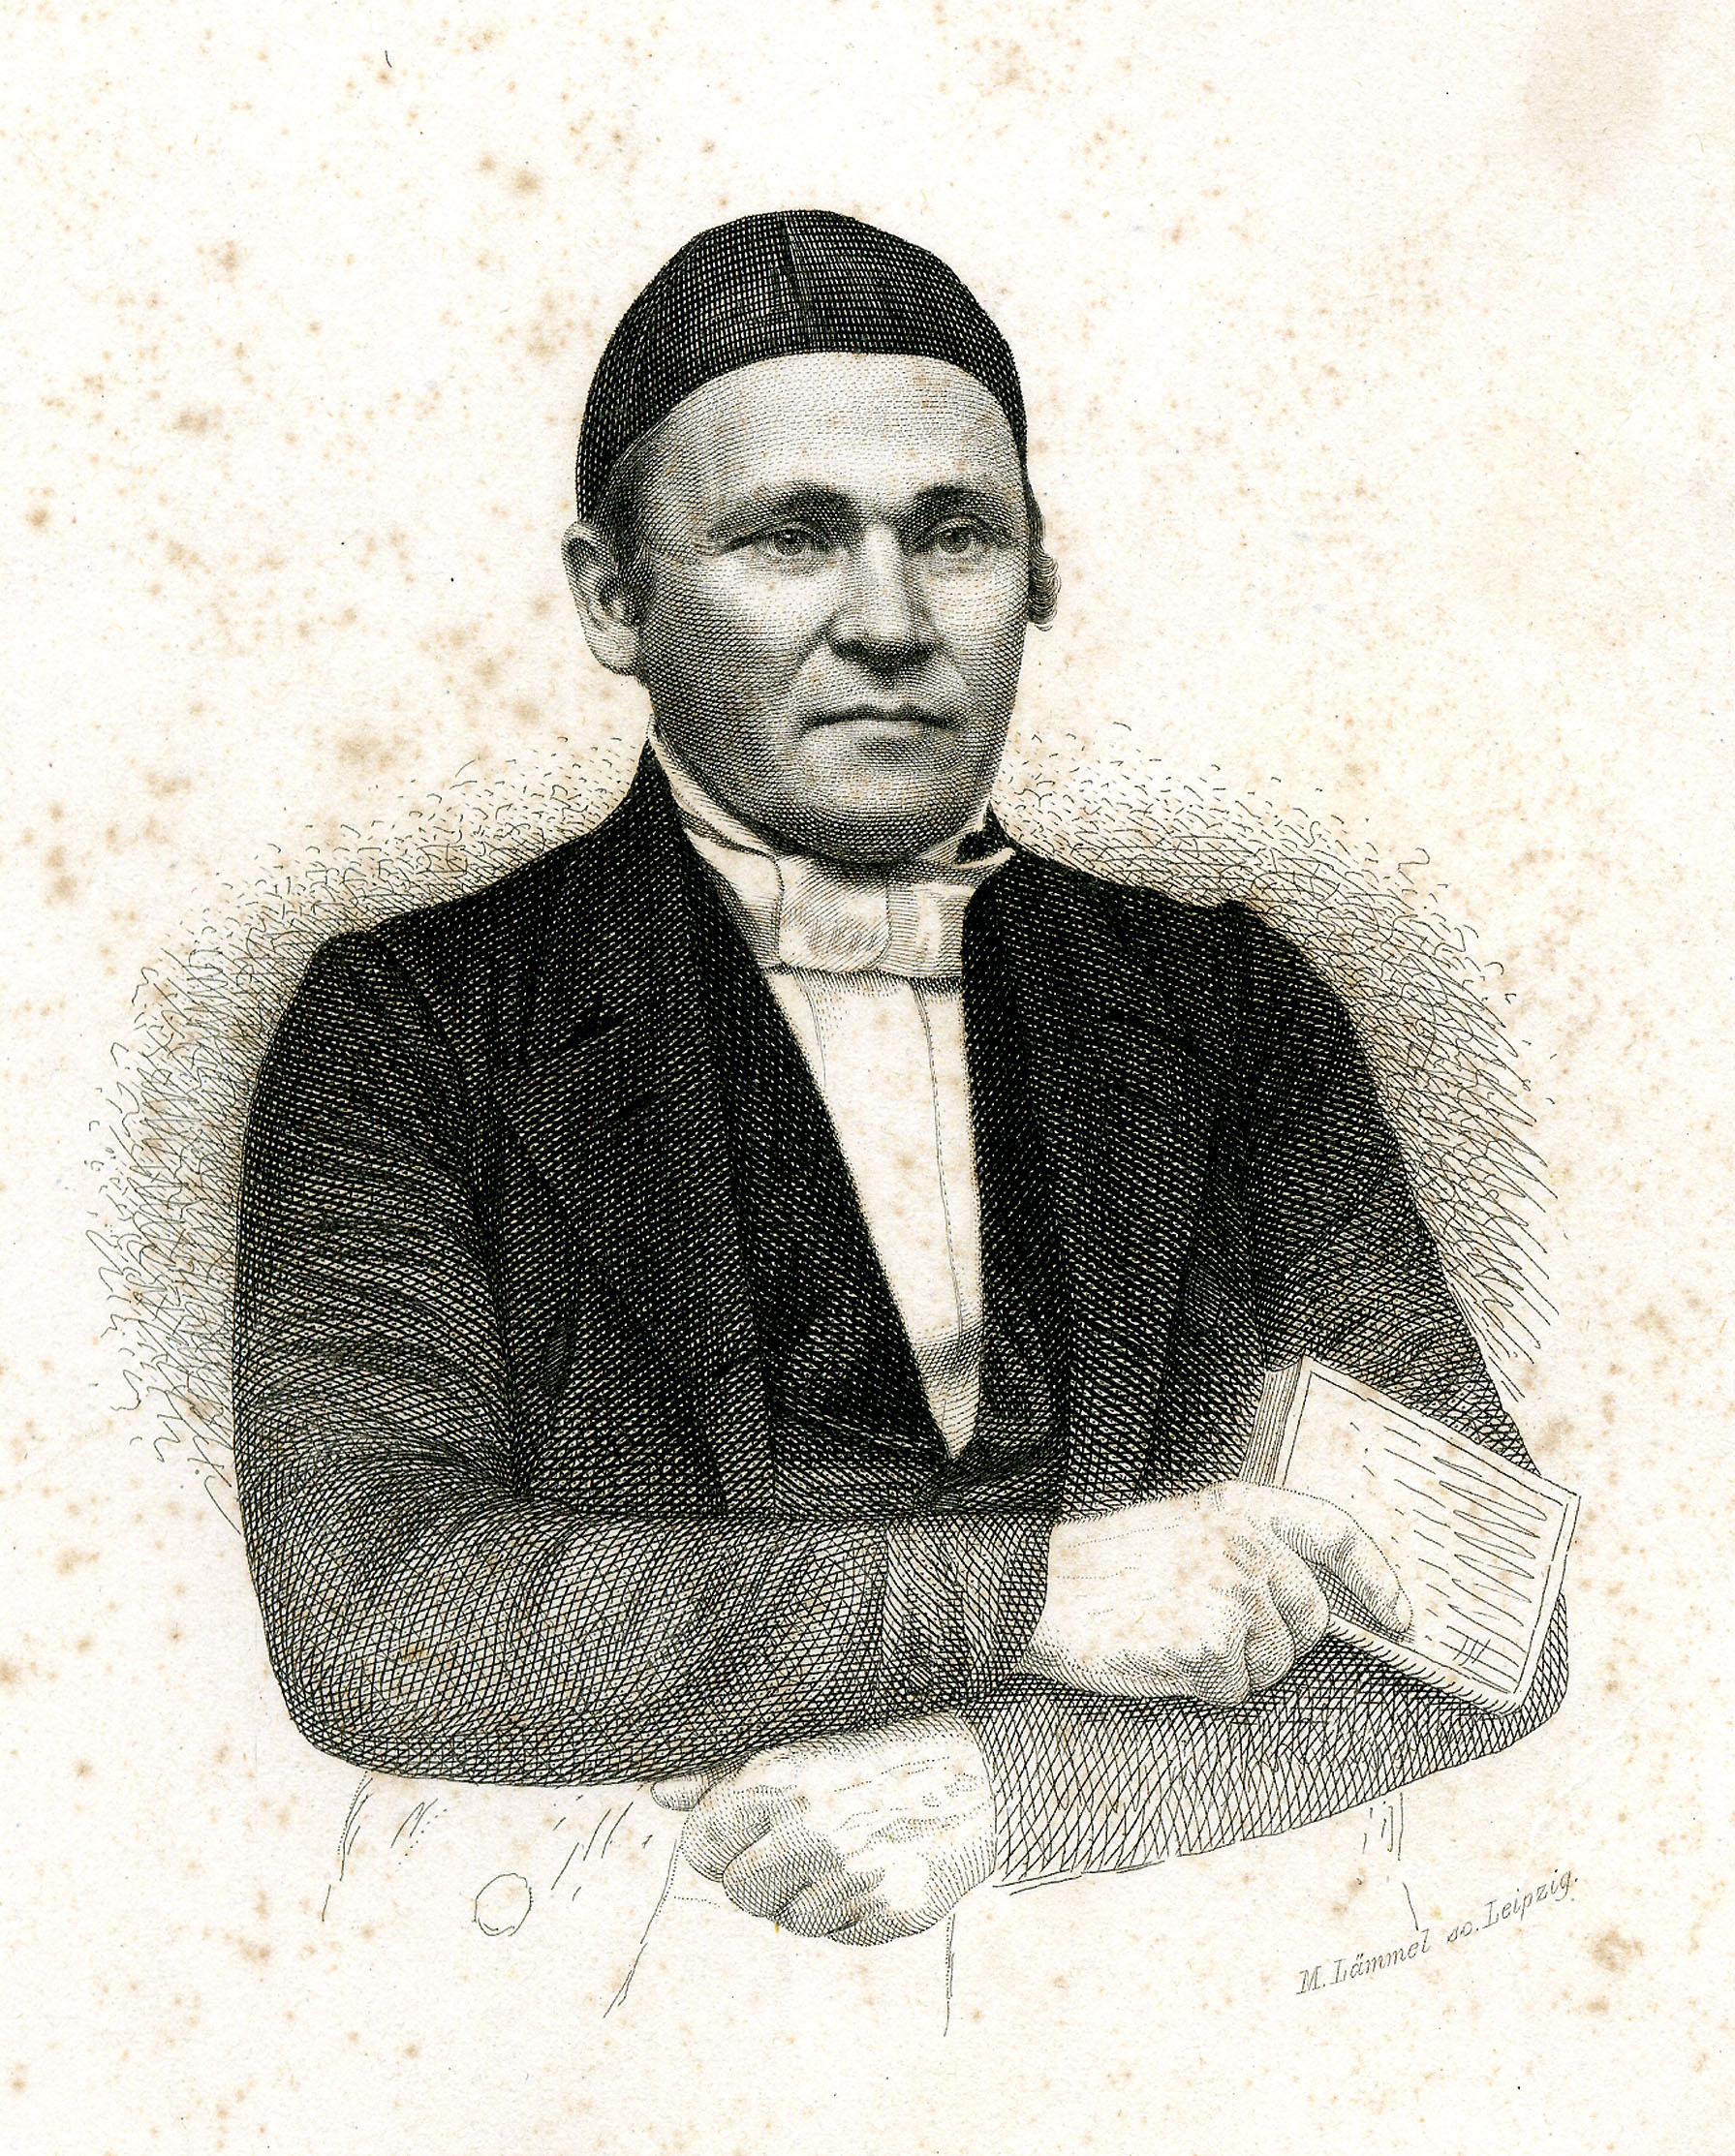 Johann Ludwig Krapf